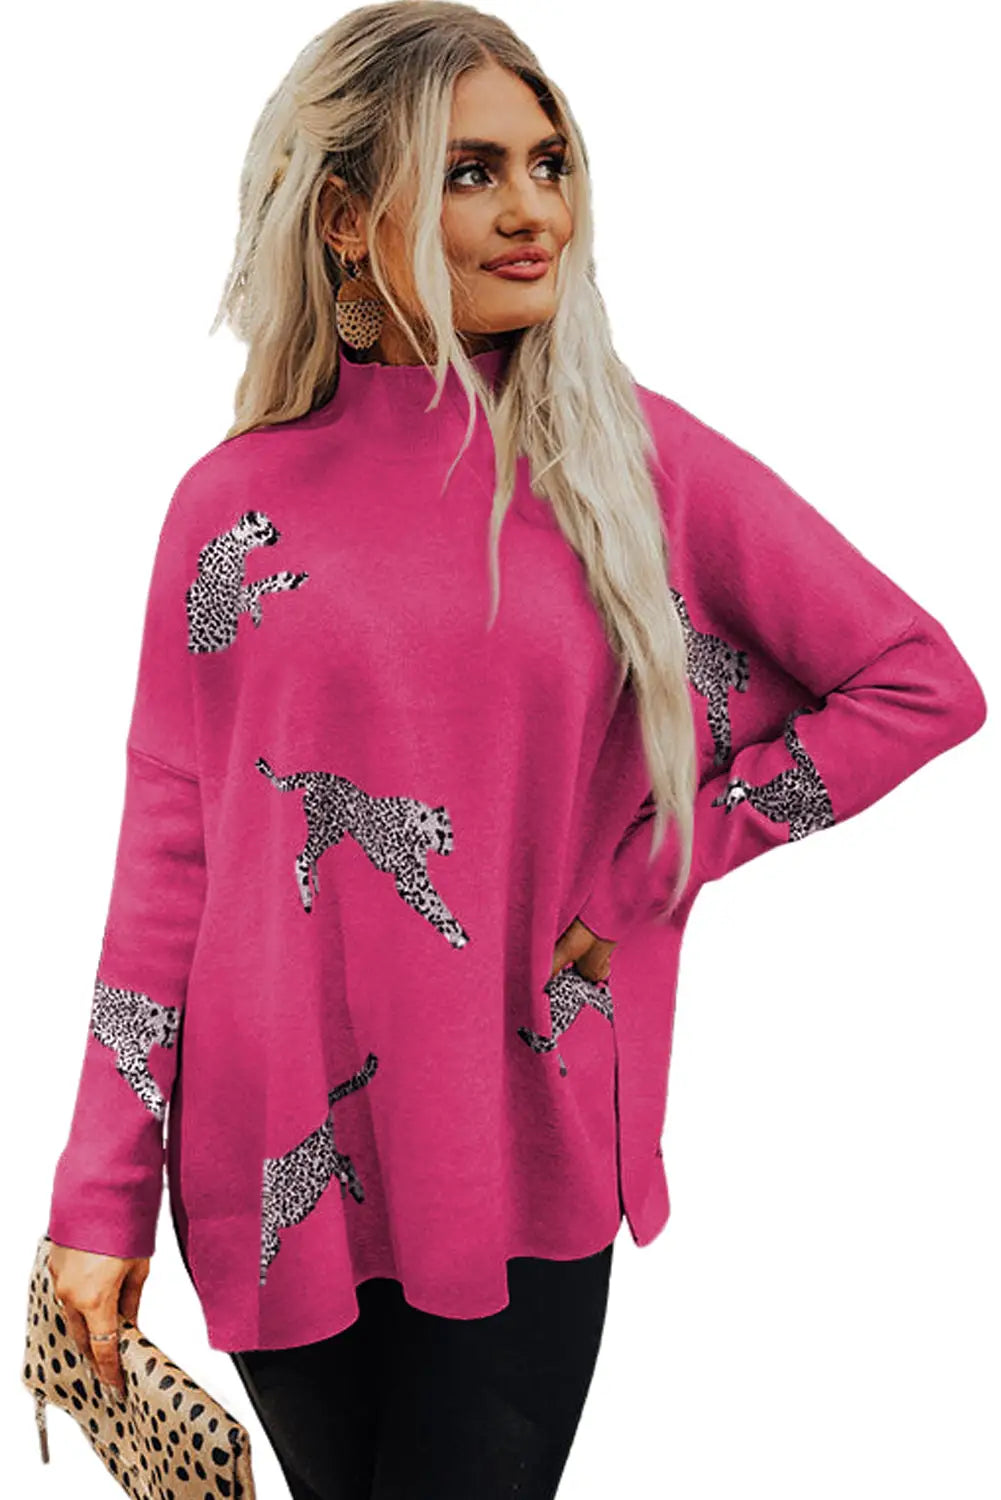 Rose red lively cheetah print high neck split hem sweater - sweaters & cardigans